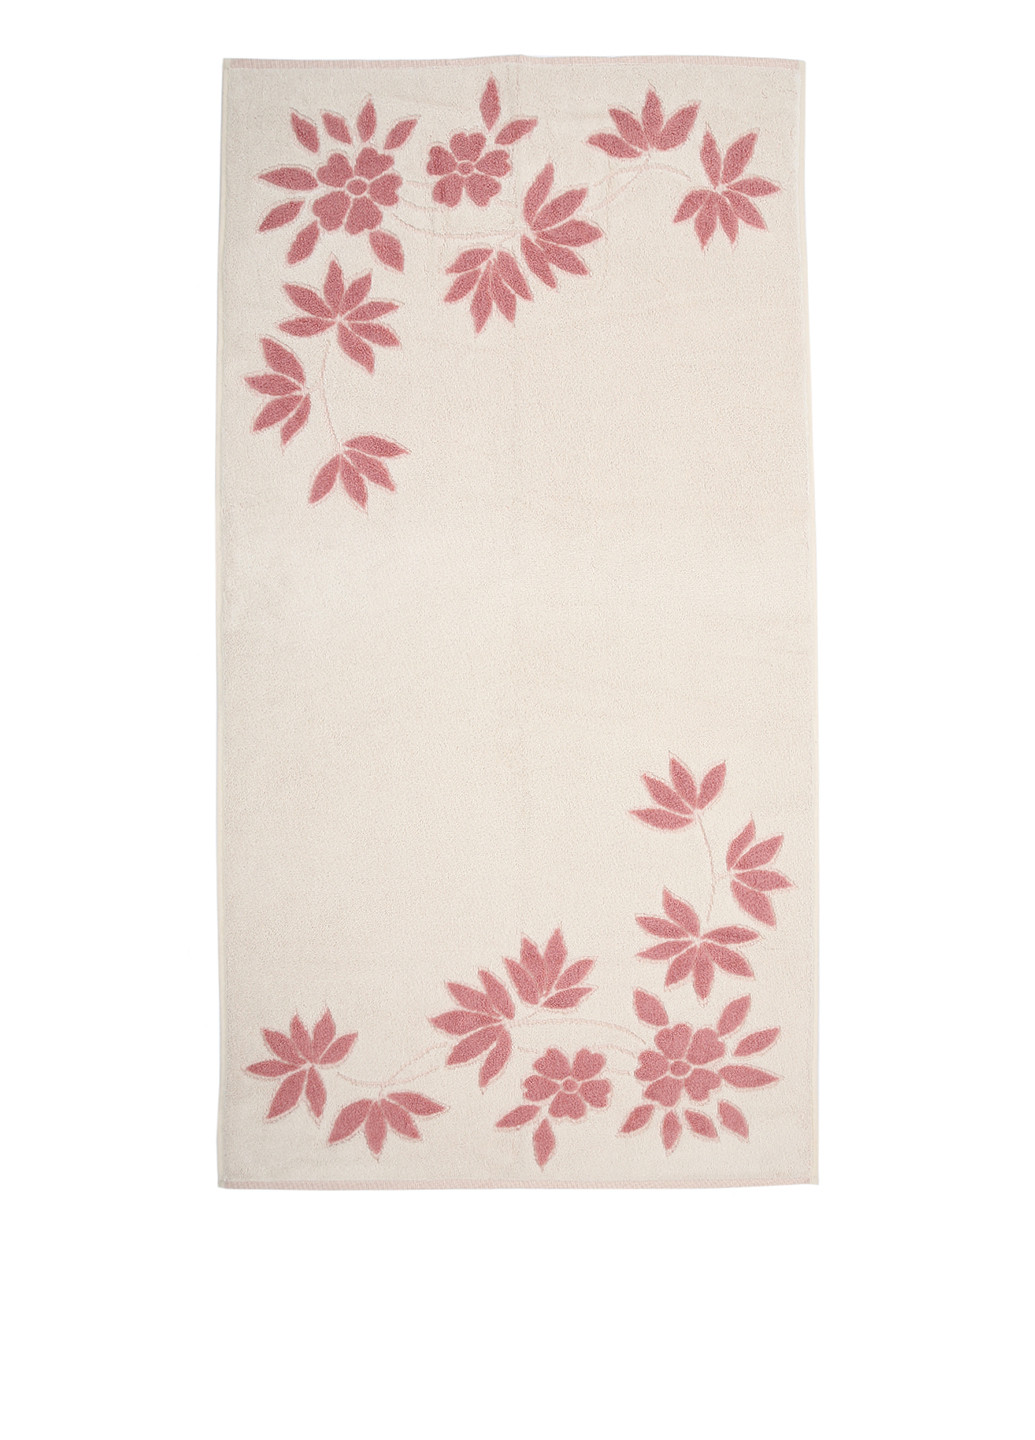 Maisonette полотенце (1 шт.), 76х152 см рисунок розовый производство - Турция